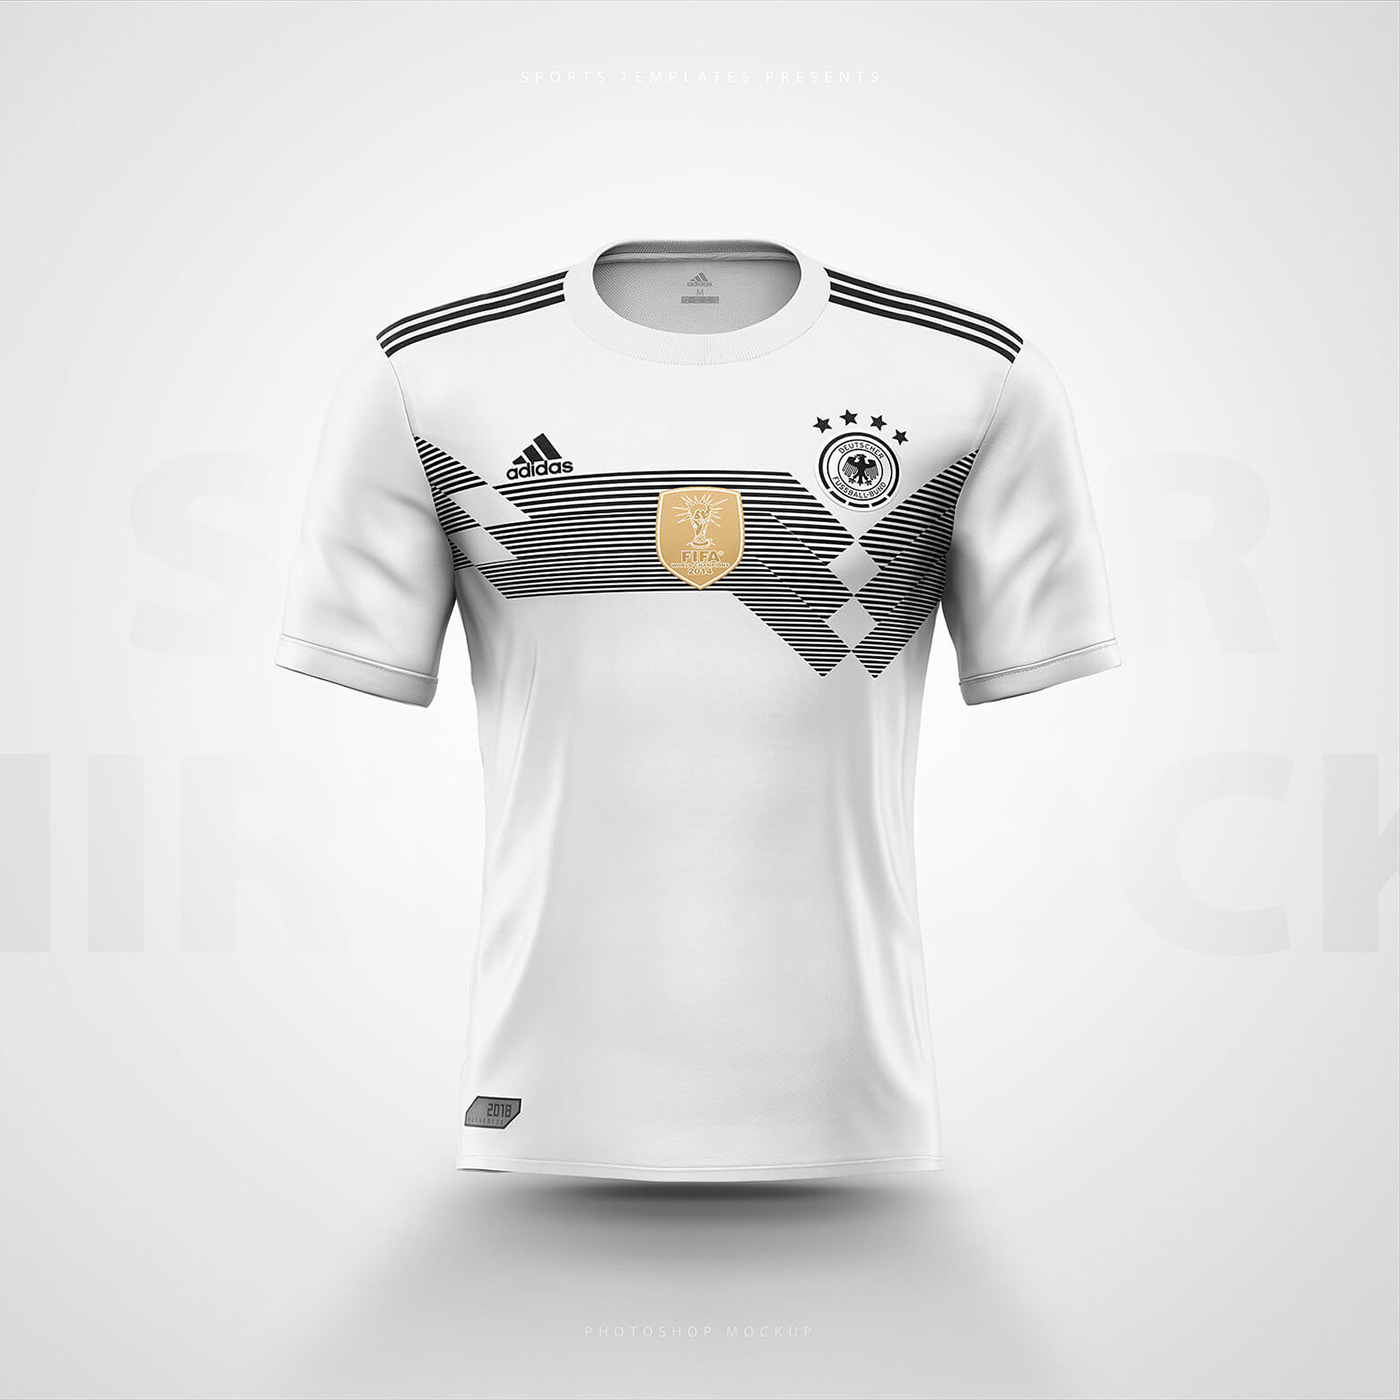 Download Adidas Football Soccer Shirt Builder Psd Template On Behance Free Mockups